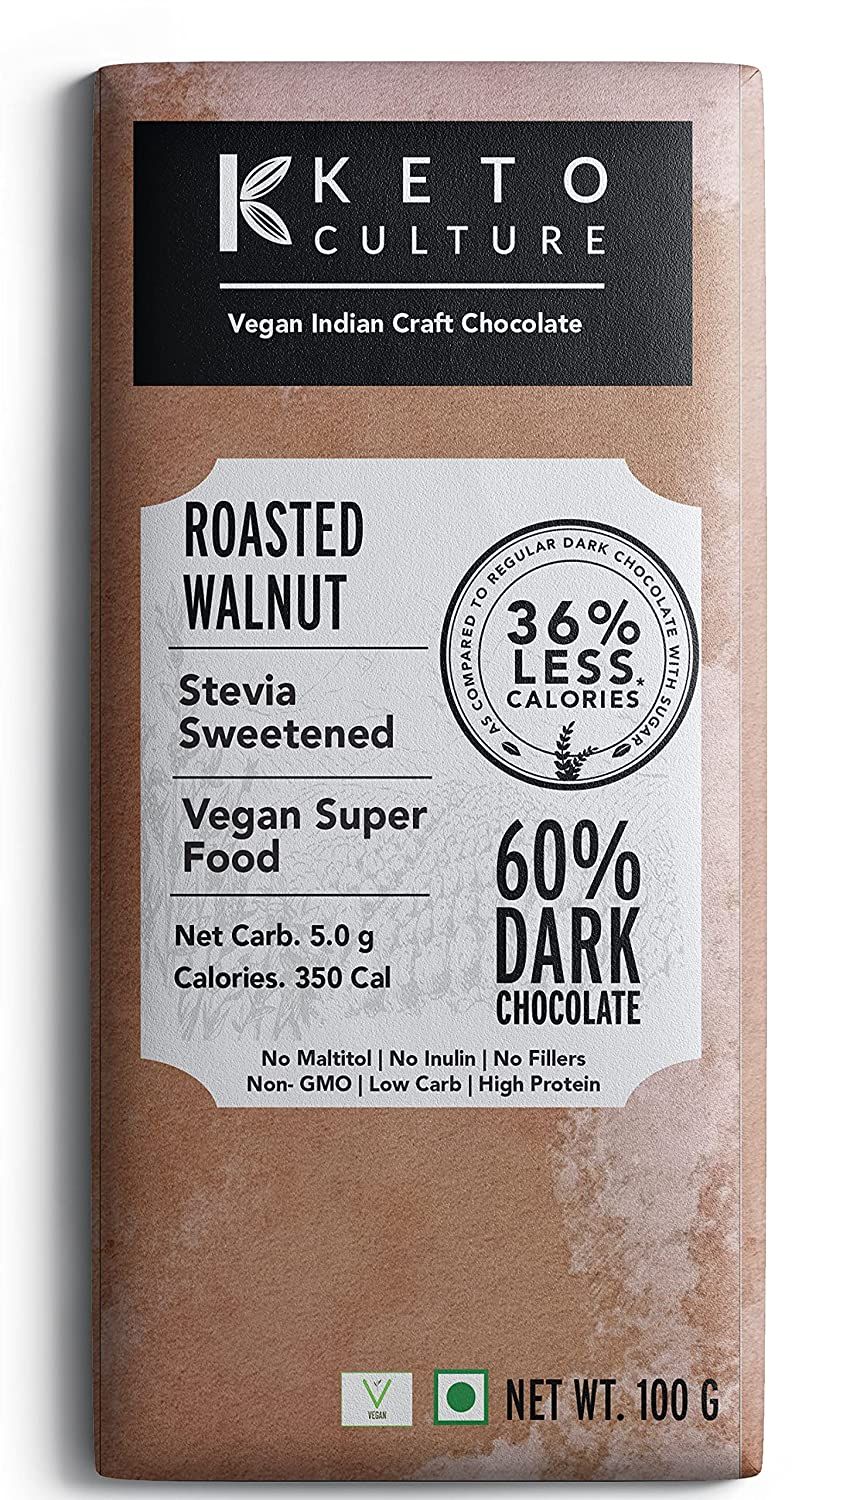 Keto Culture Roasted Walnut Vegan Dark Chocolate Image